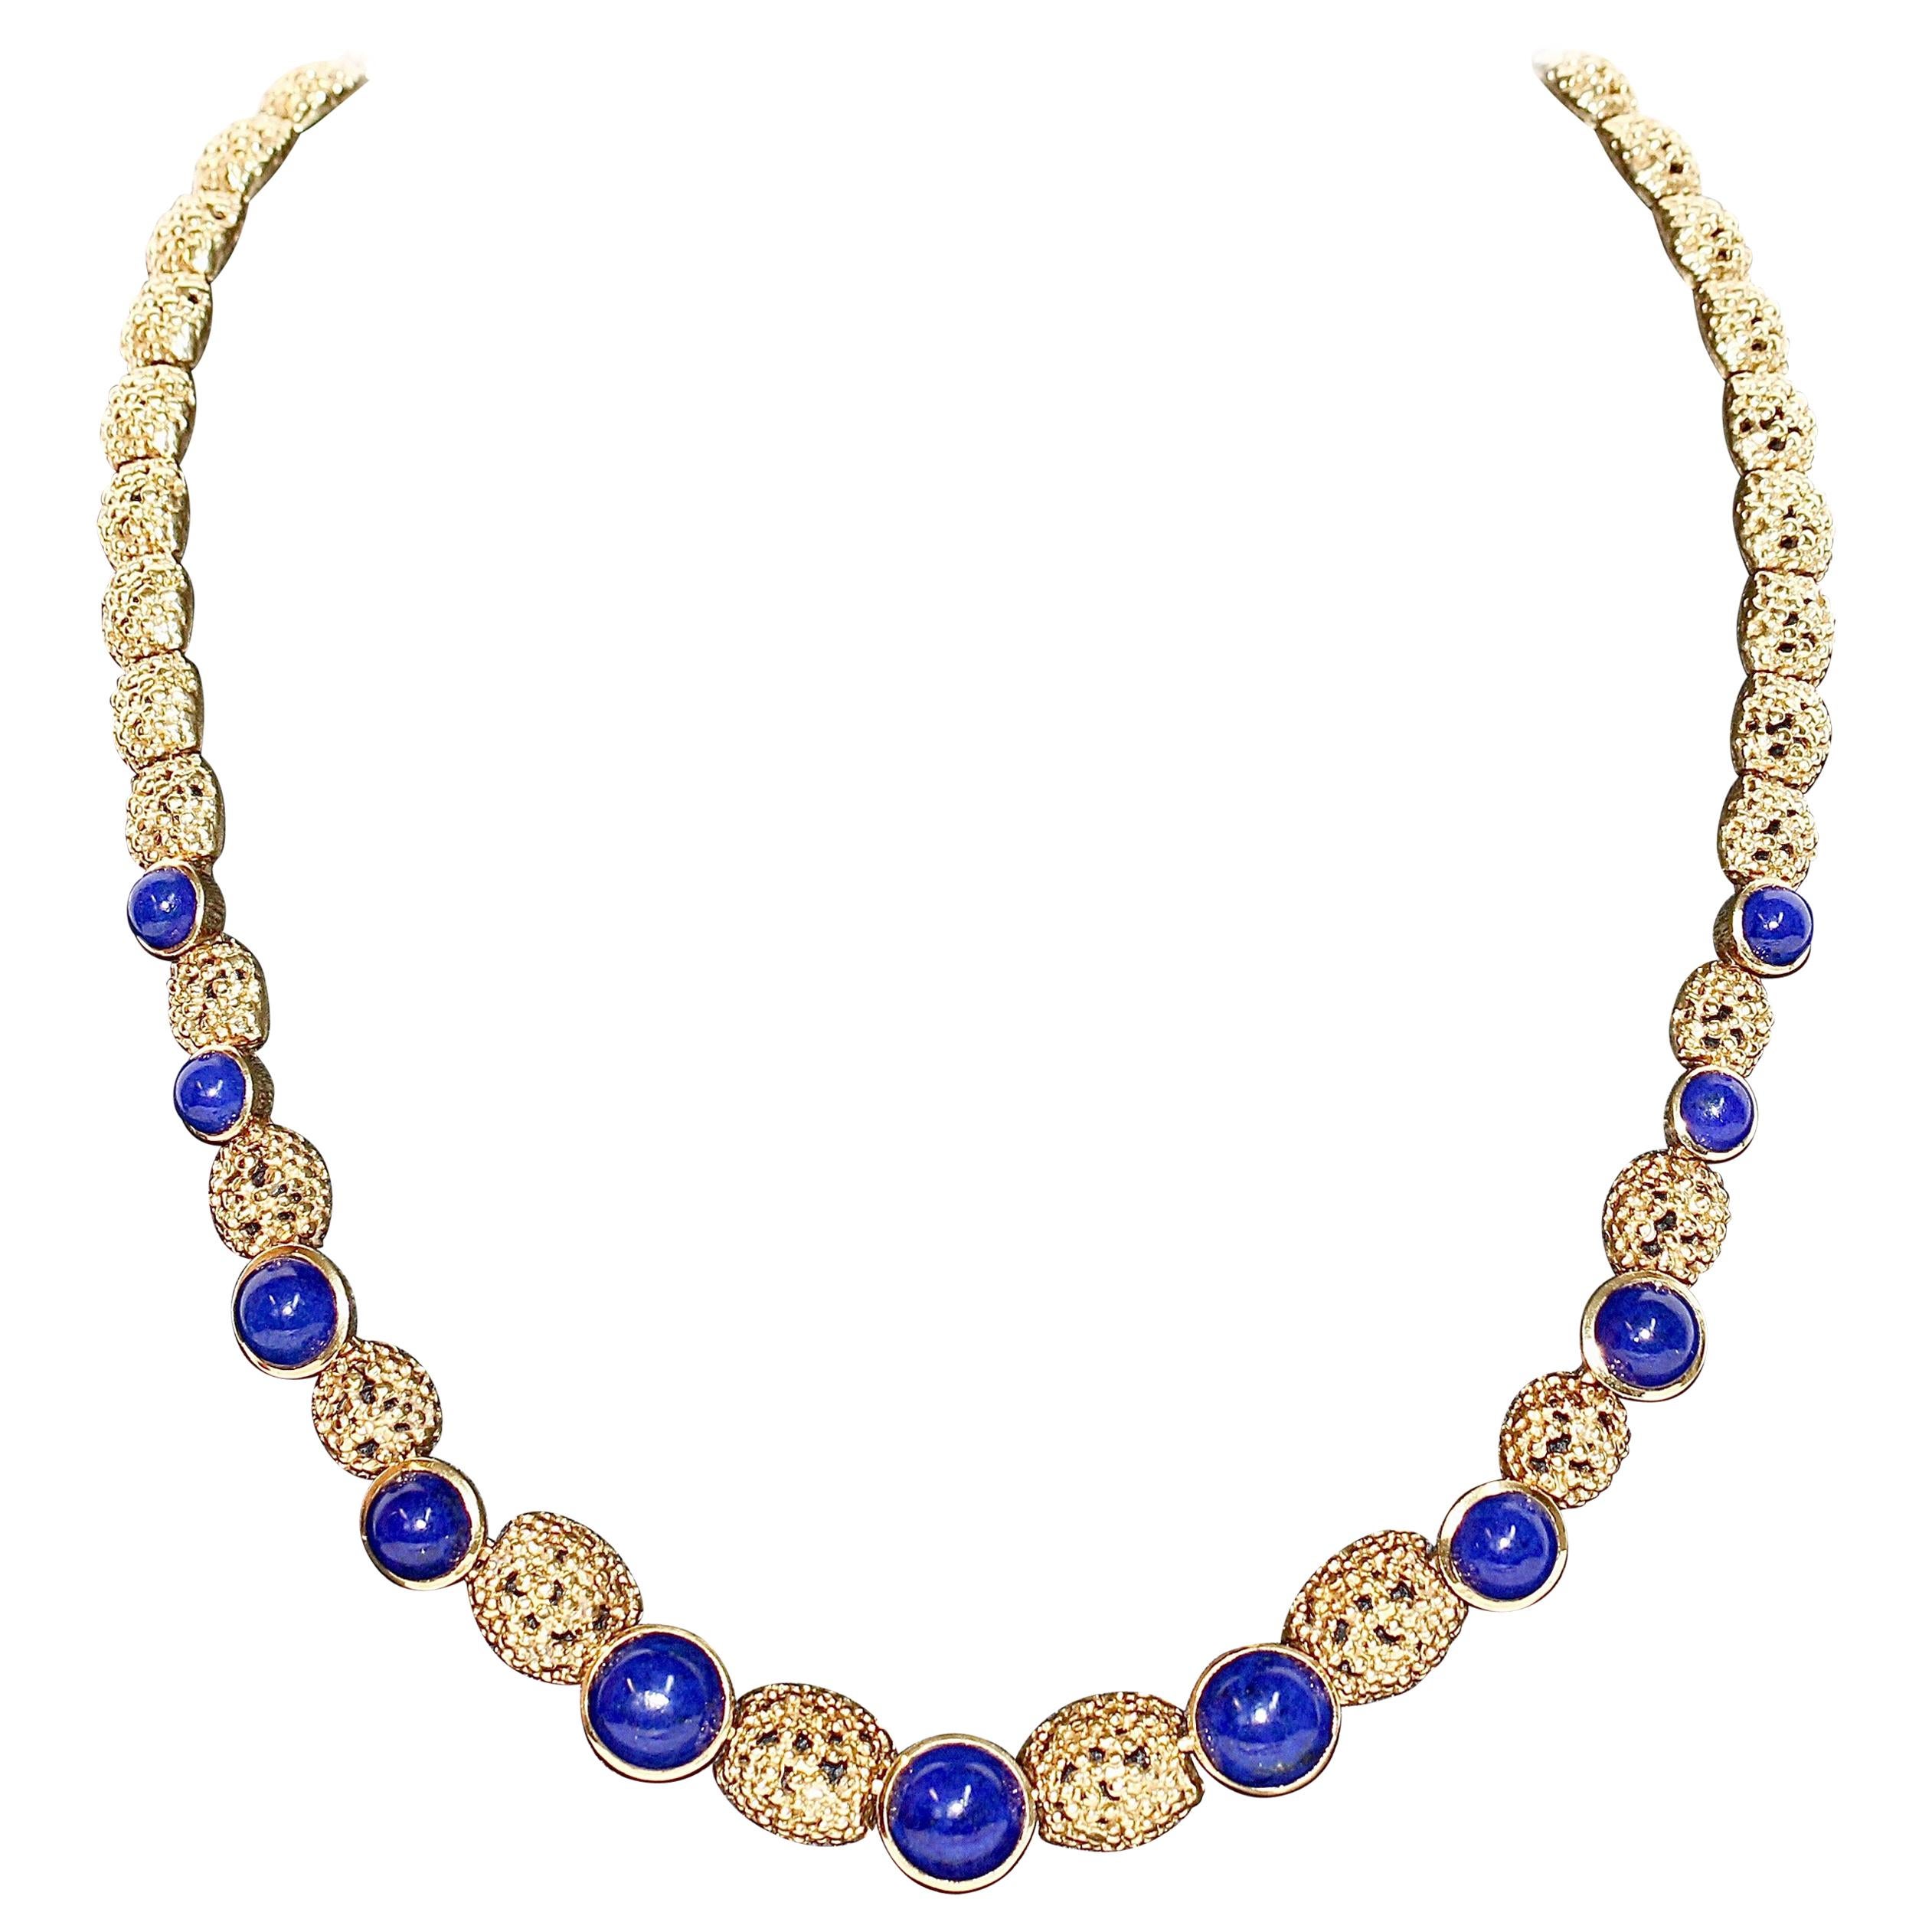 Solid 18 Karat Gold Necklace with Lapis Lazuli